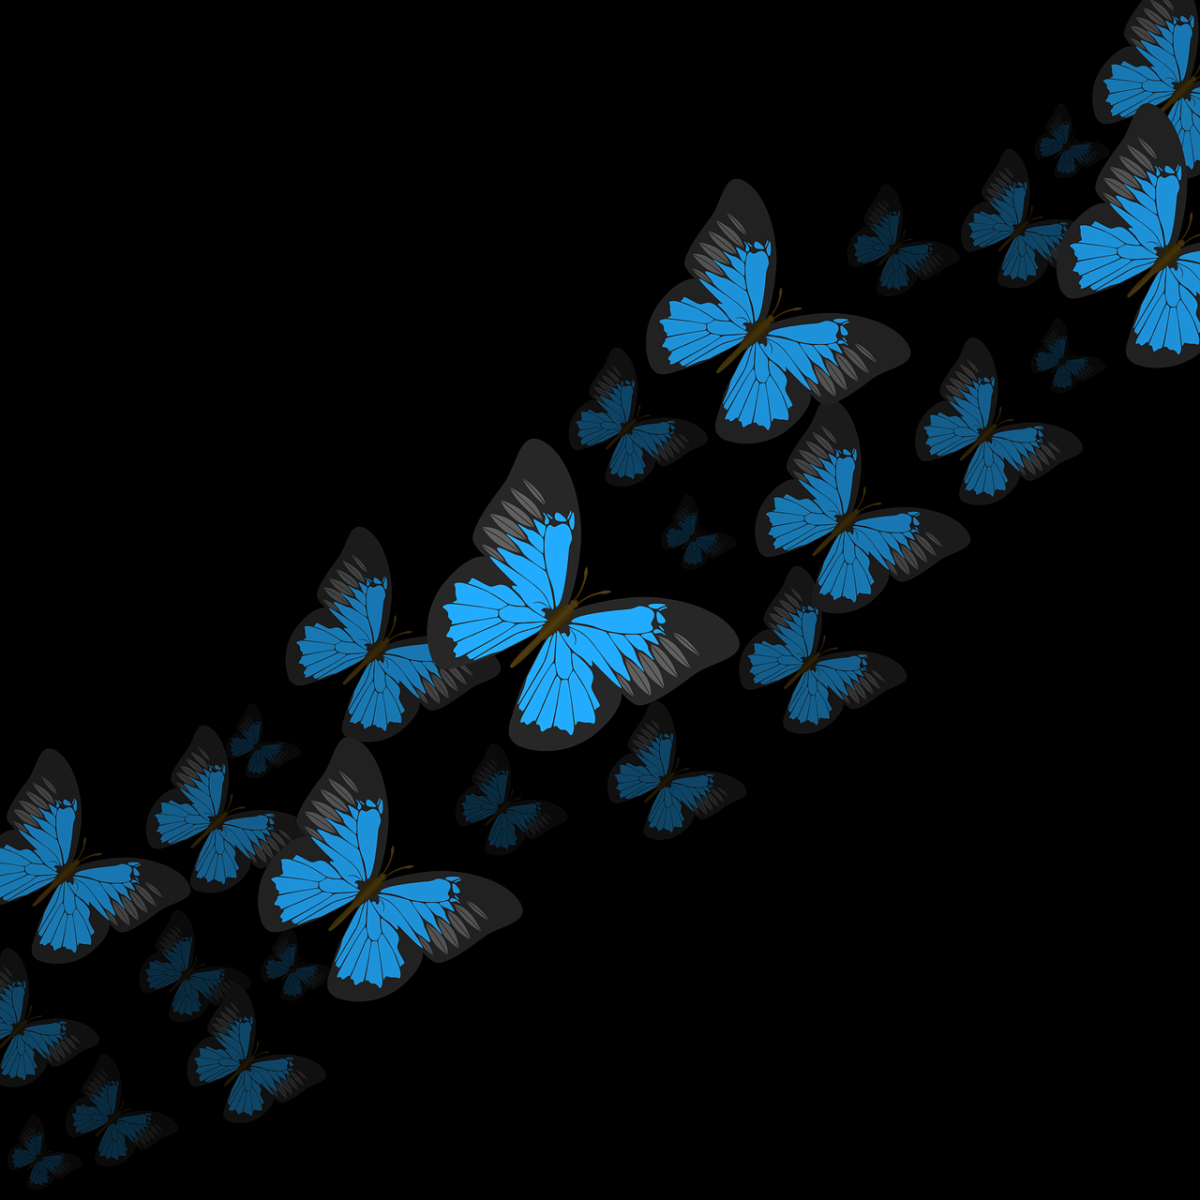 Голубые бабочки фон. Синяя бабочка. Бабочки на черном фоне. Неоновые бабочки. Синяя бабочка на черном фоне.